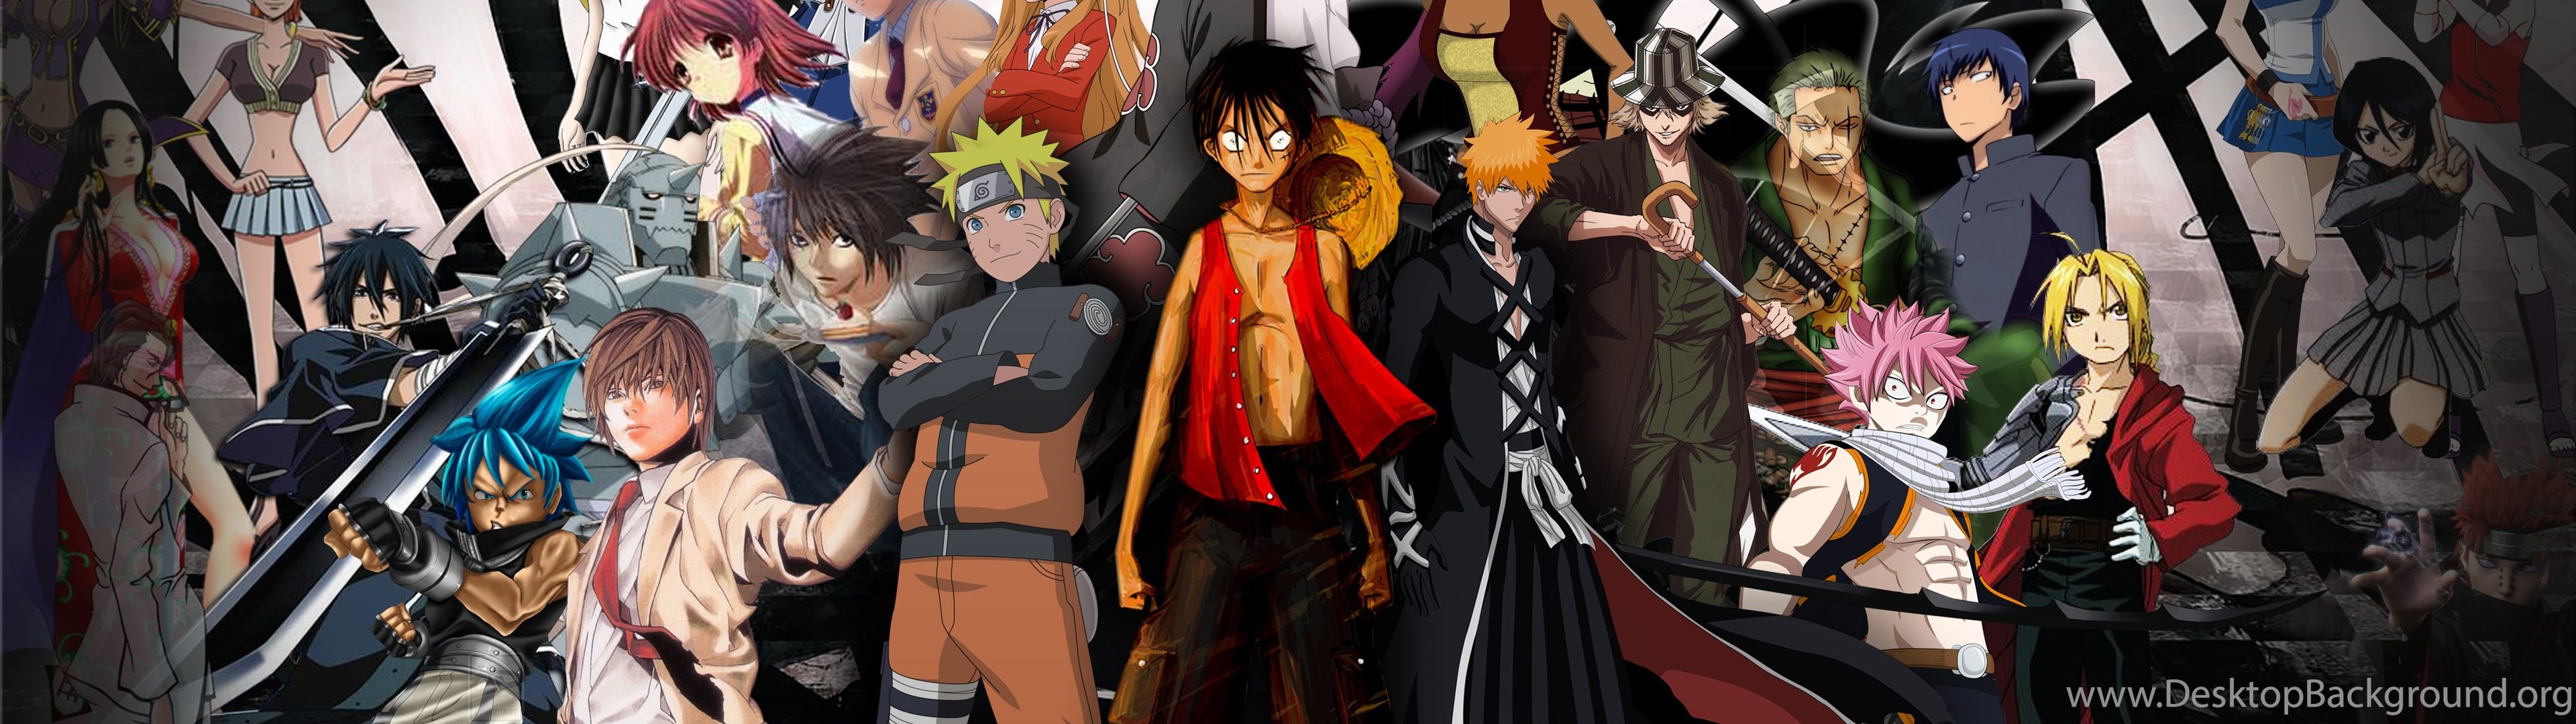 Animes Wallpapers Desktop Background